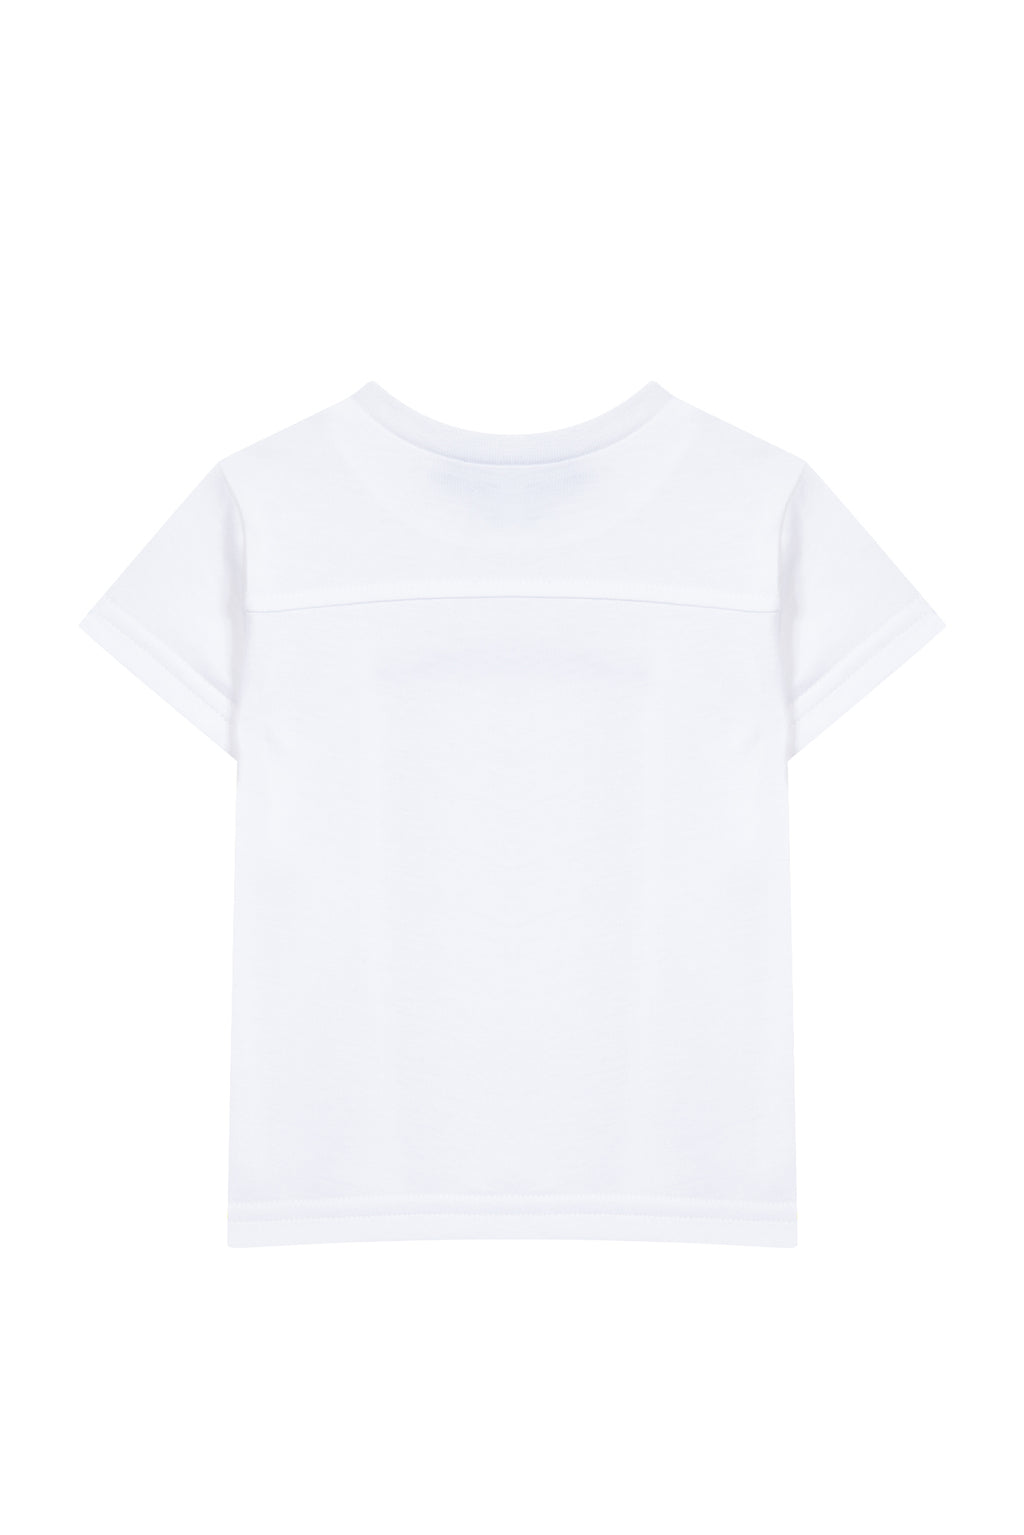 T-shirt -  White explorers